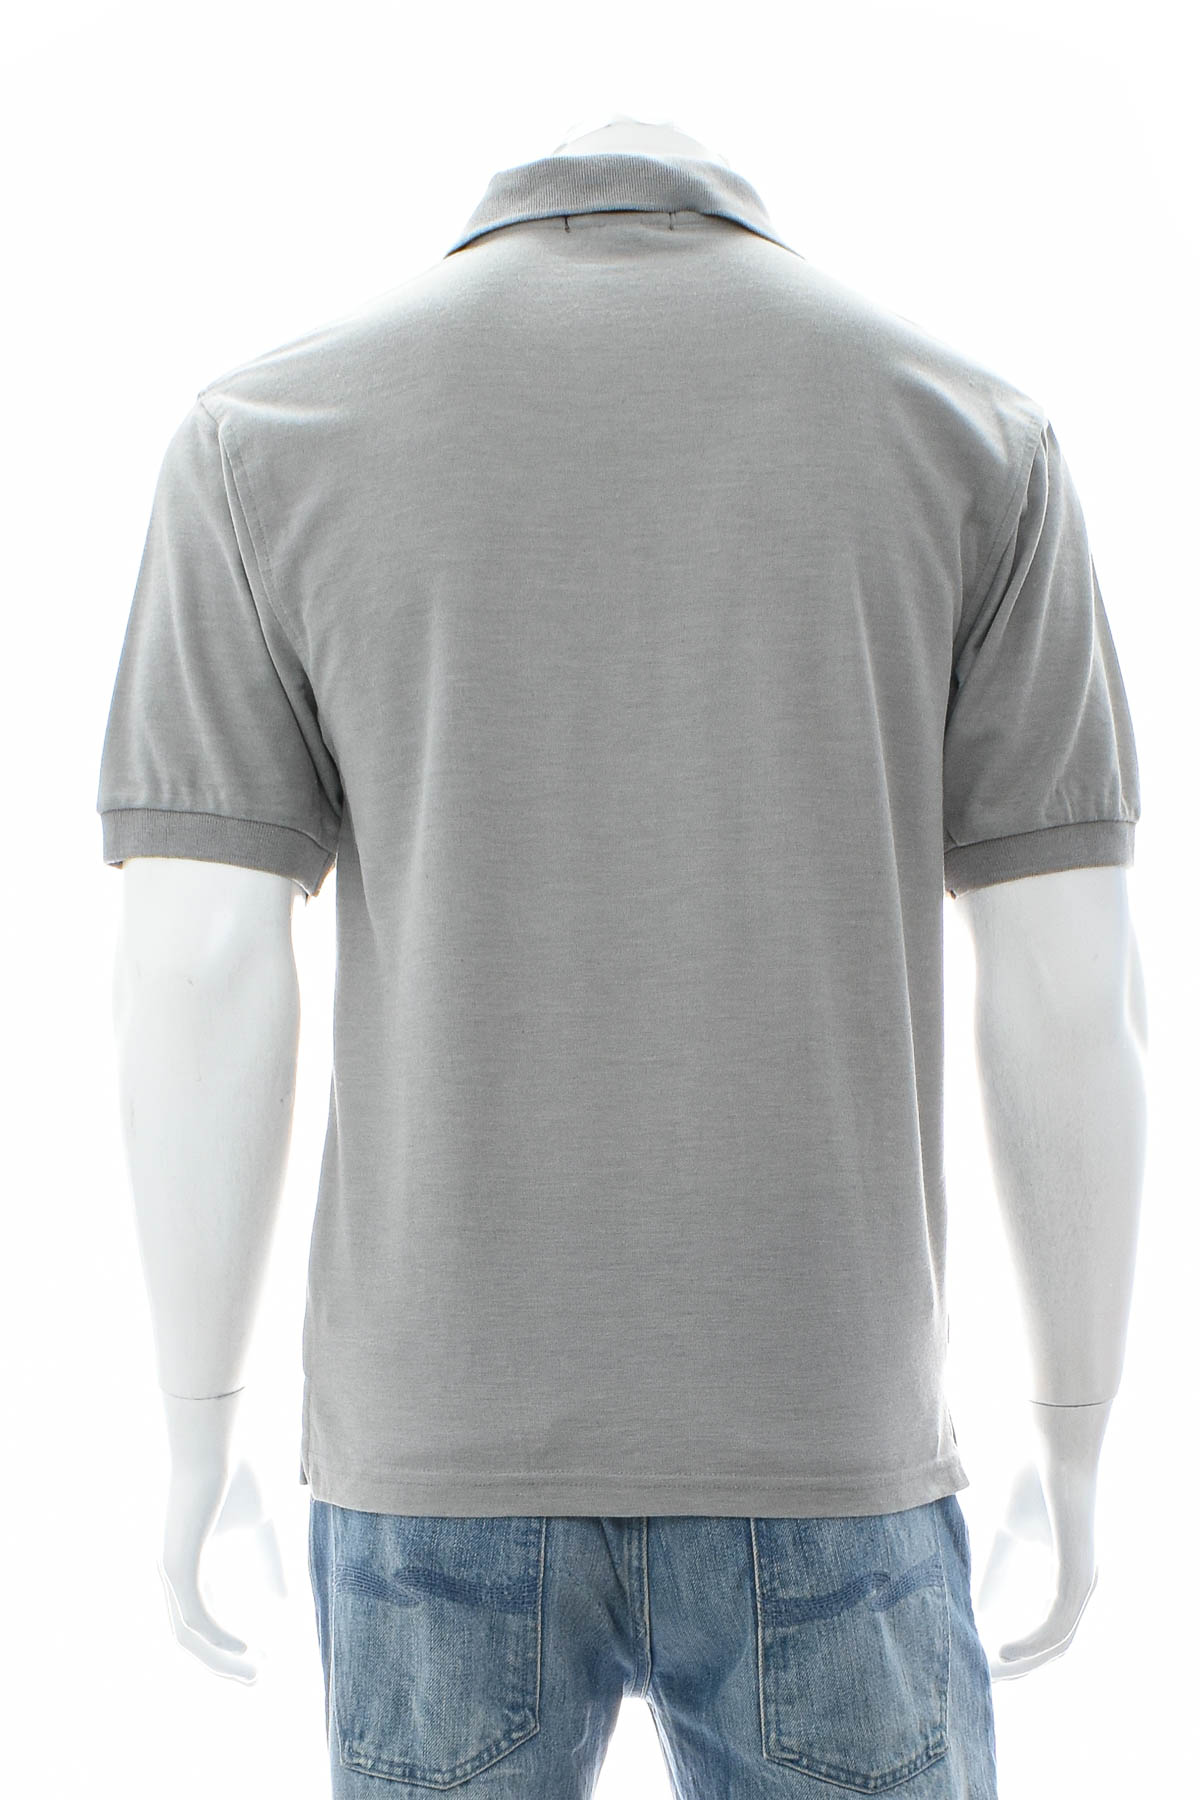 Men's T-shirt - Bossini - 1